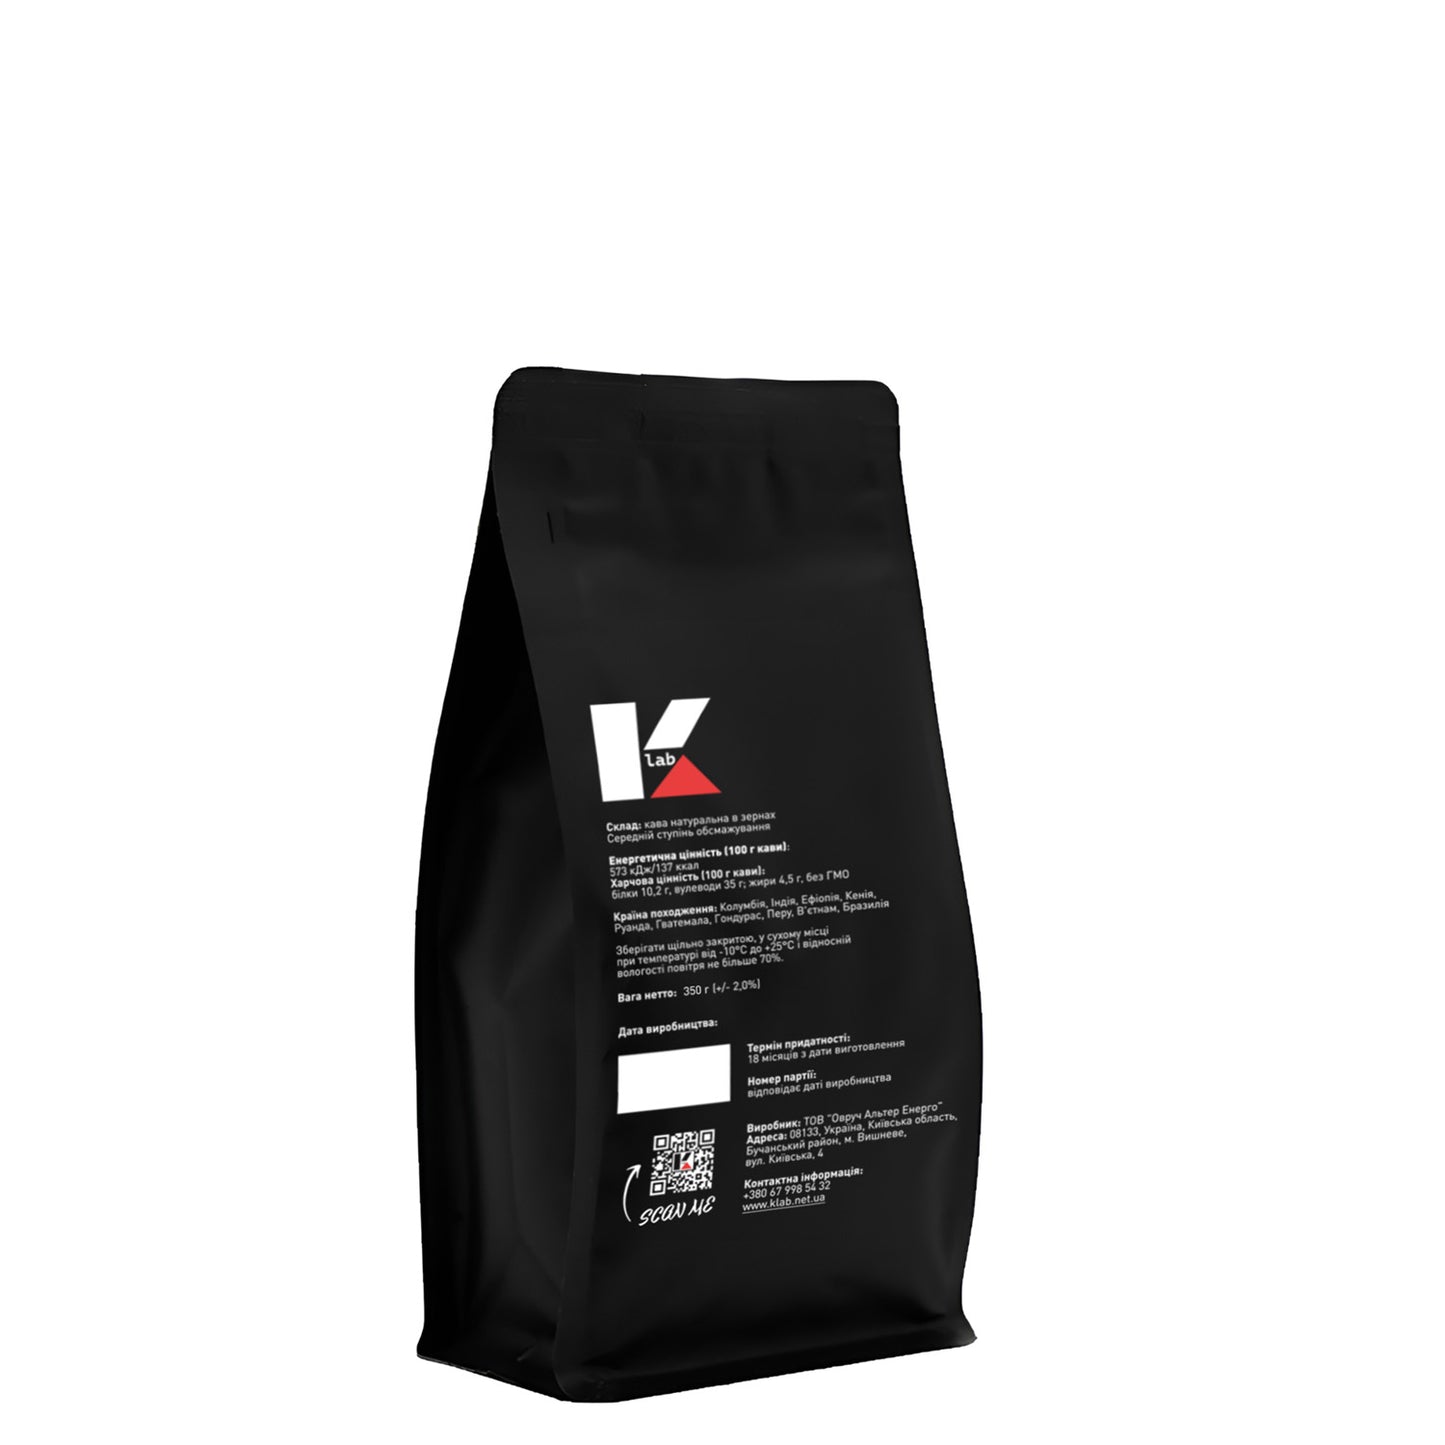 COFFEE STORY №12 - Klab (0.35kg back)